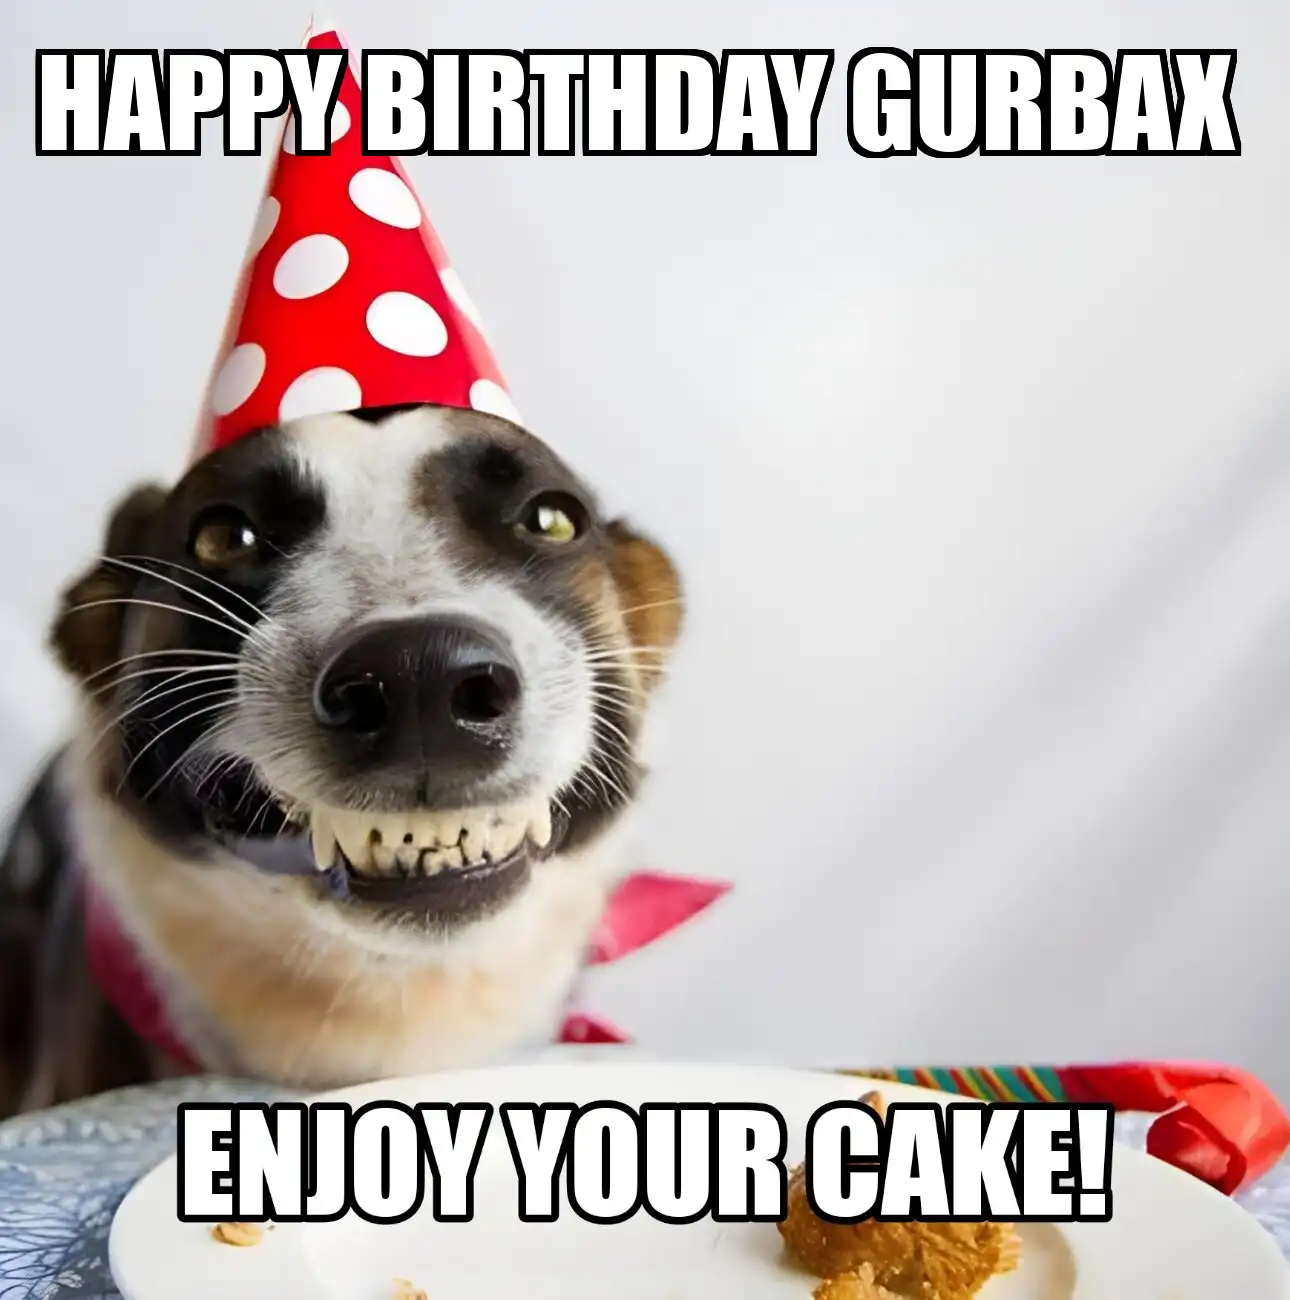 Happy Birthday Gurbax Enjoy Your Cake Dog Meme